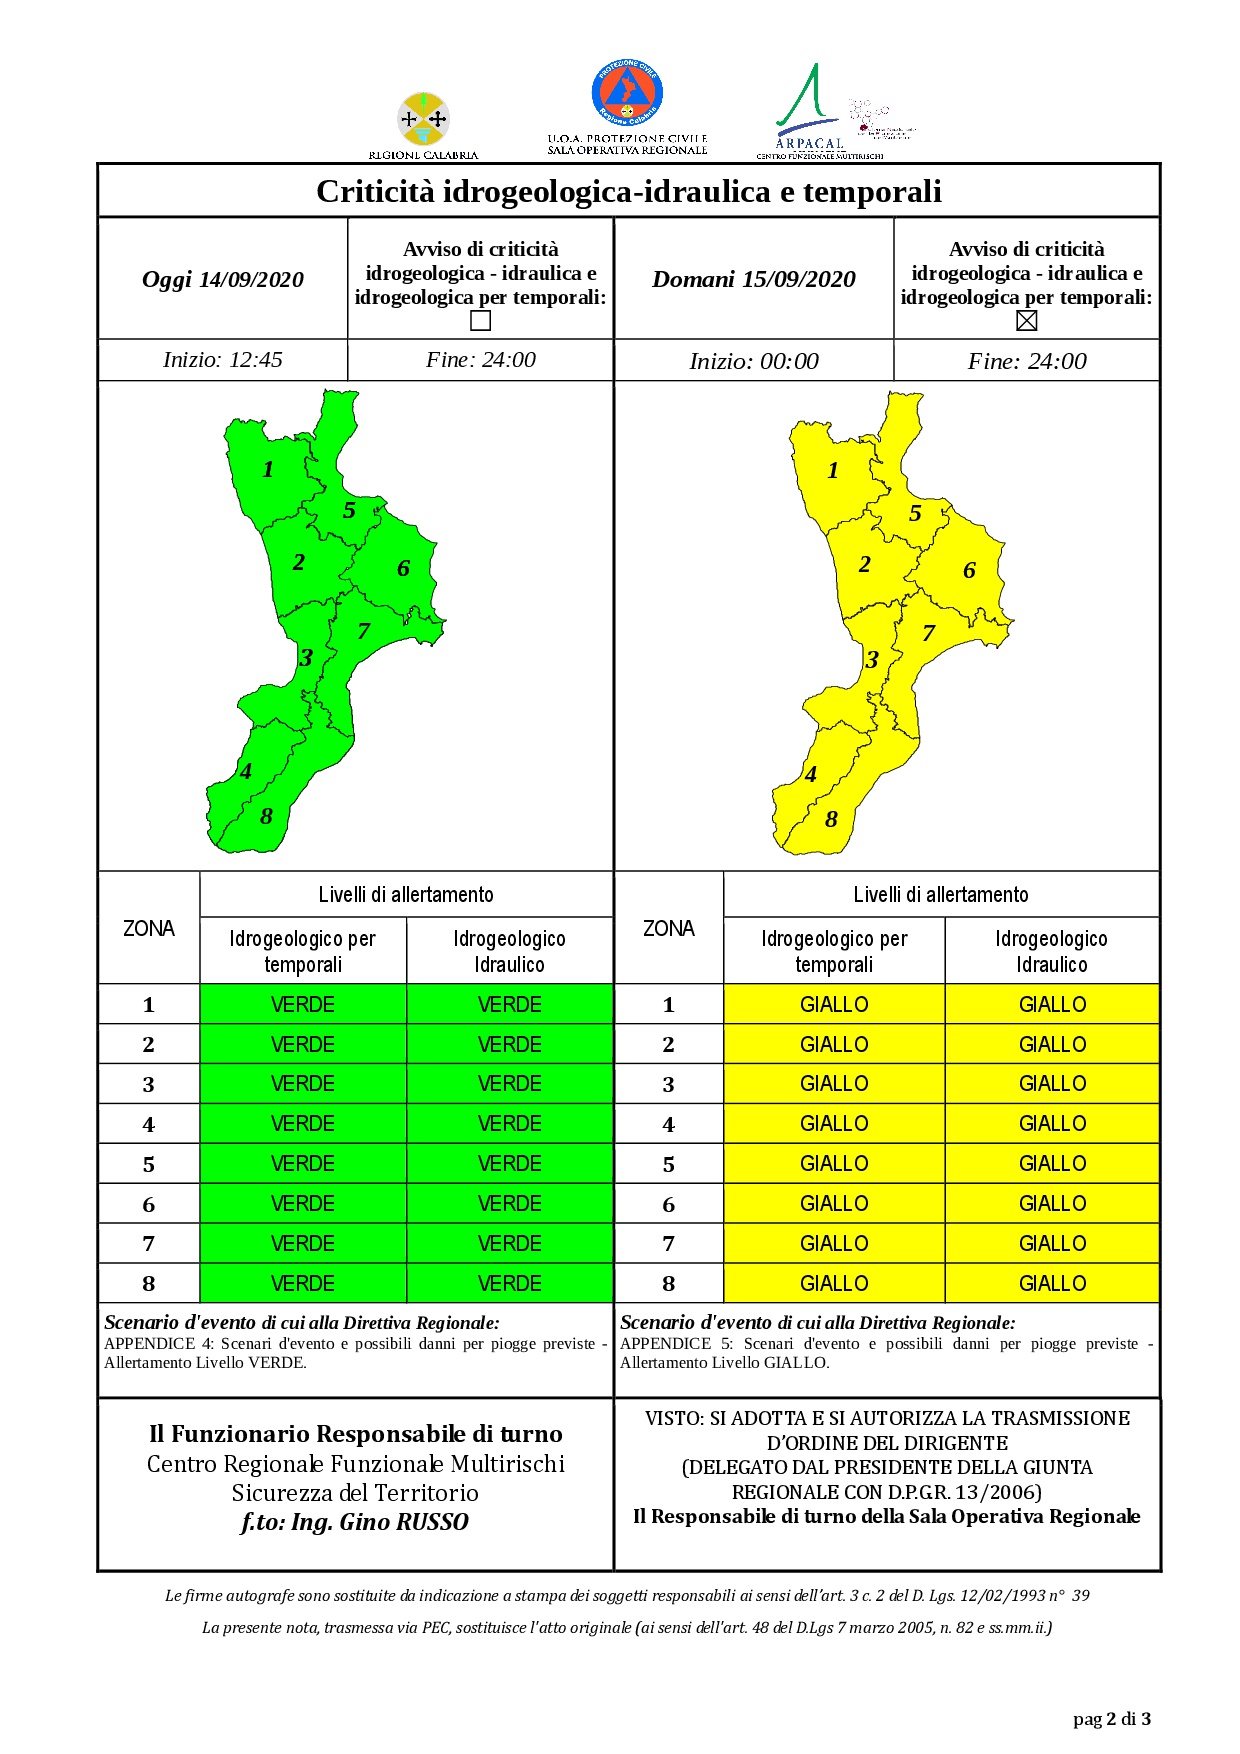 Criticità idrogeologica-idraulica e temporali in Calabria 14-09-2020